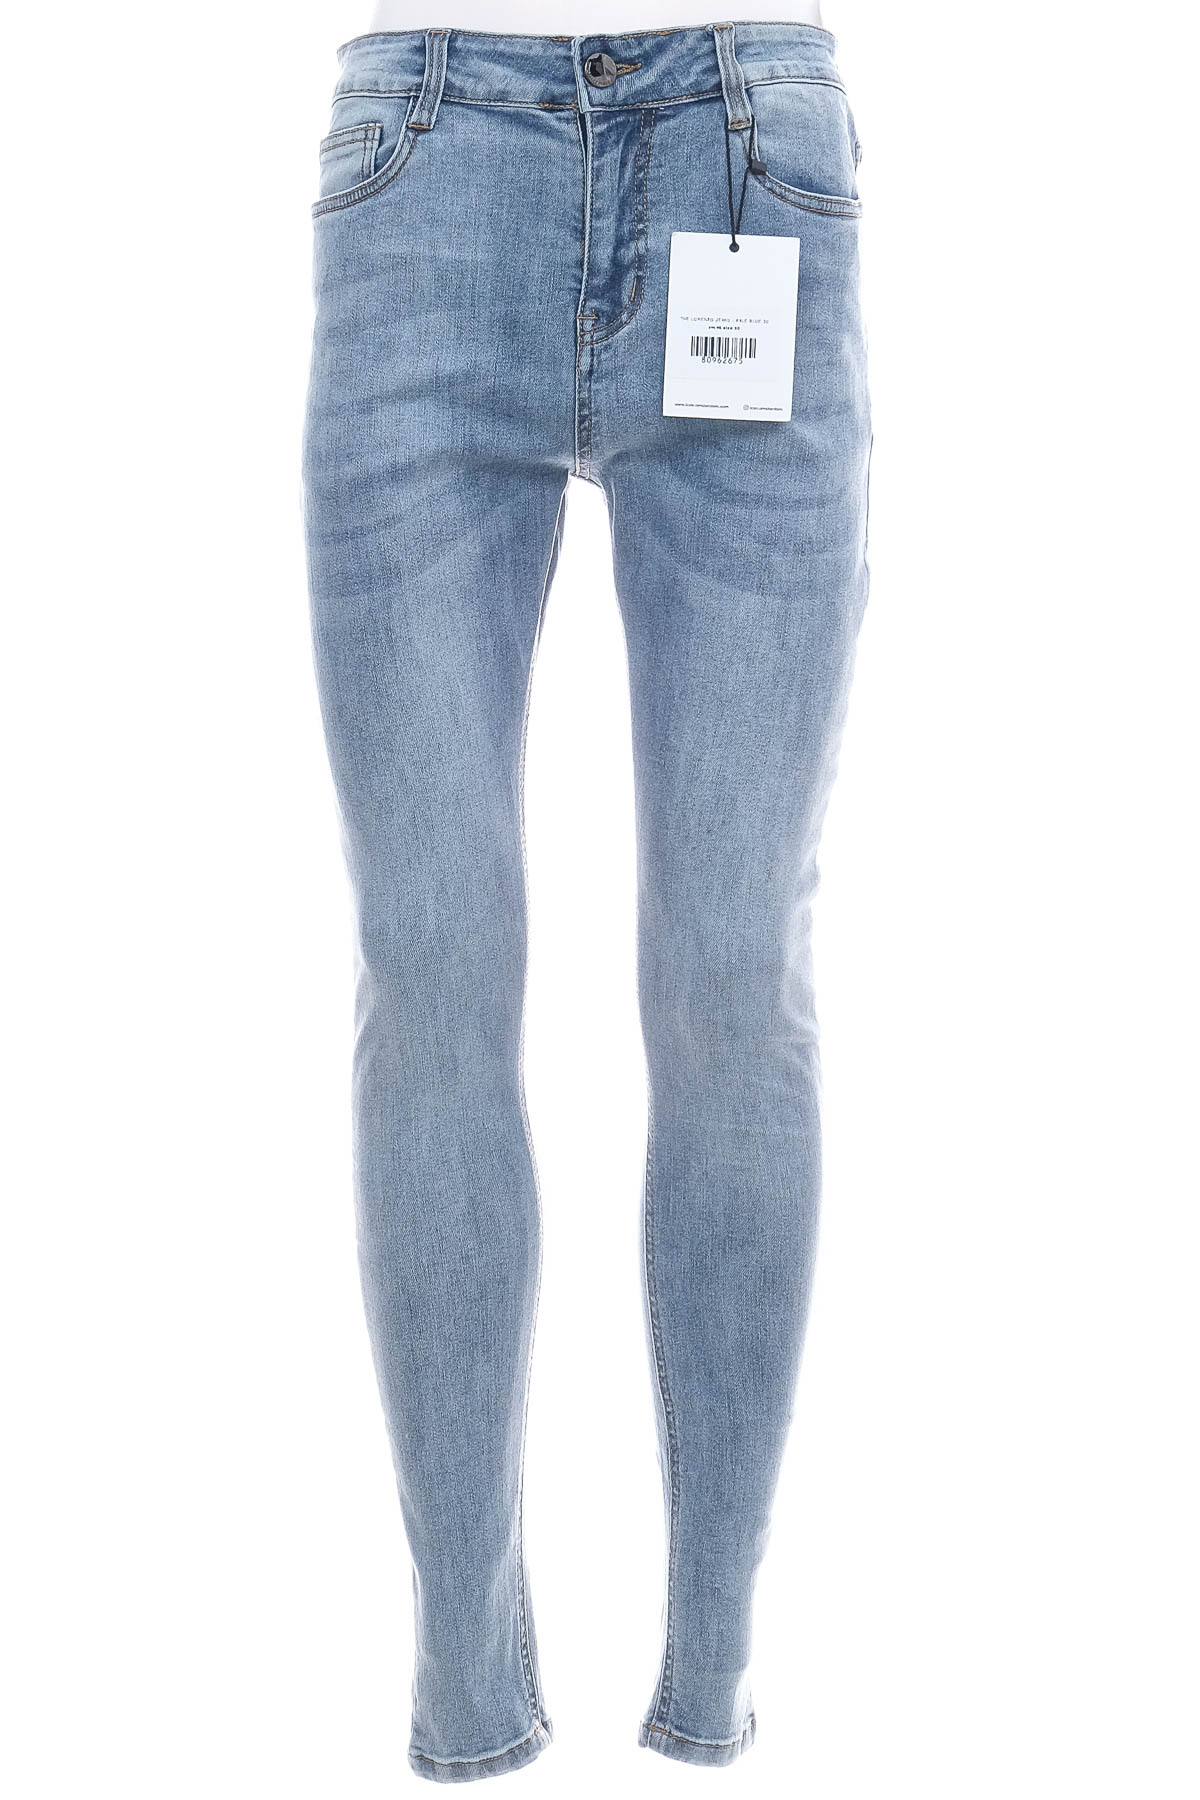 Men's jeans - ICON. AMSTERDAM - 0